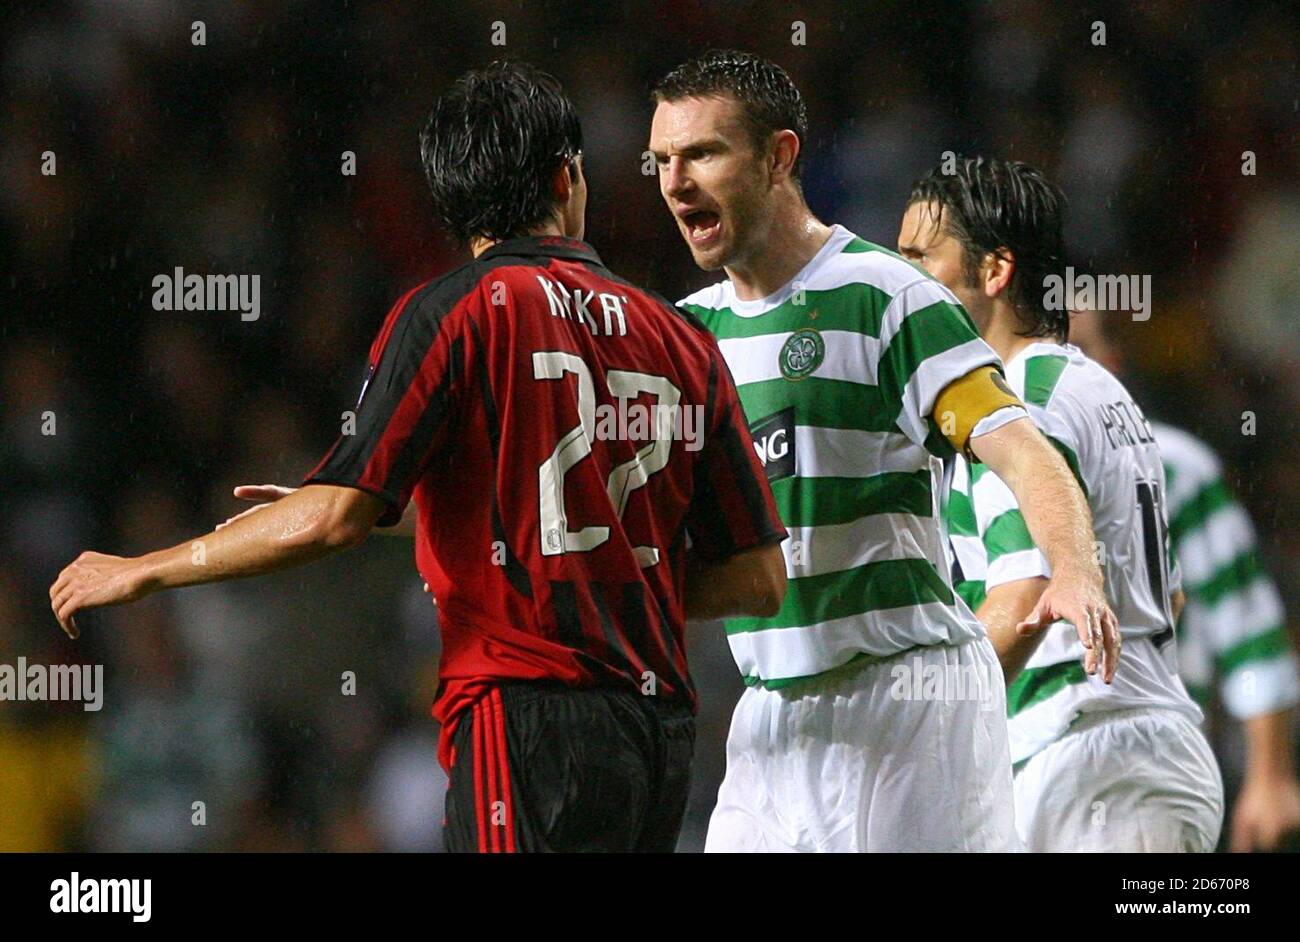 Celtic captain Stephen McManus (right) has words with AC Milan's Ricardo Kaka. Stock Photo